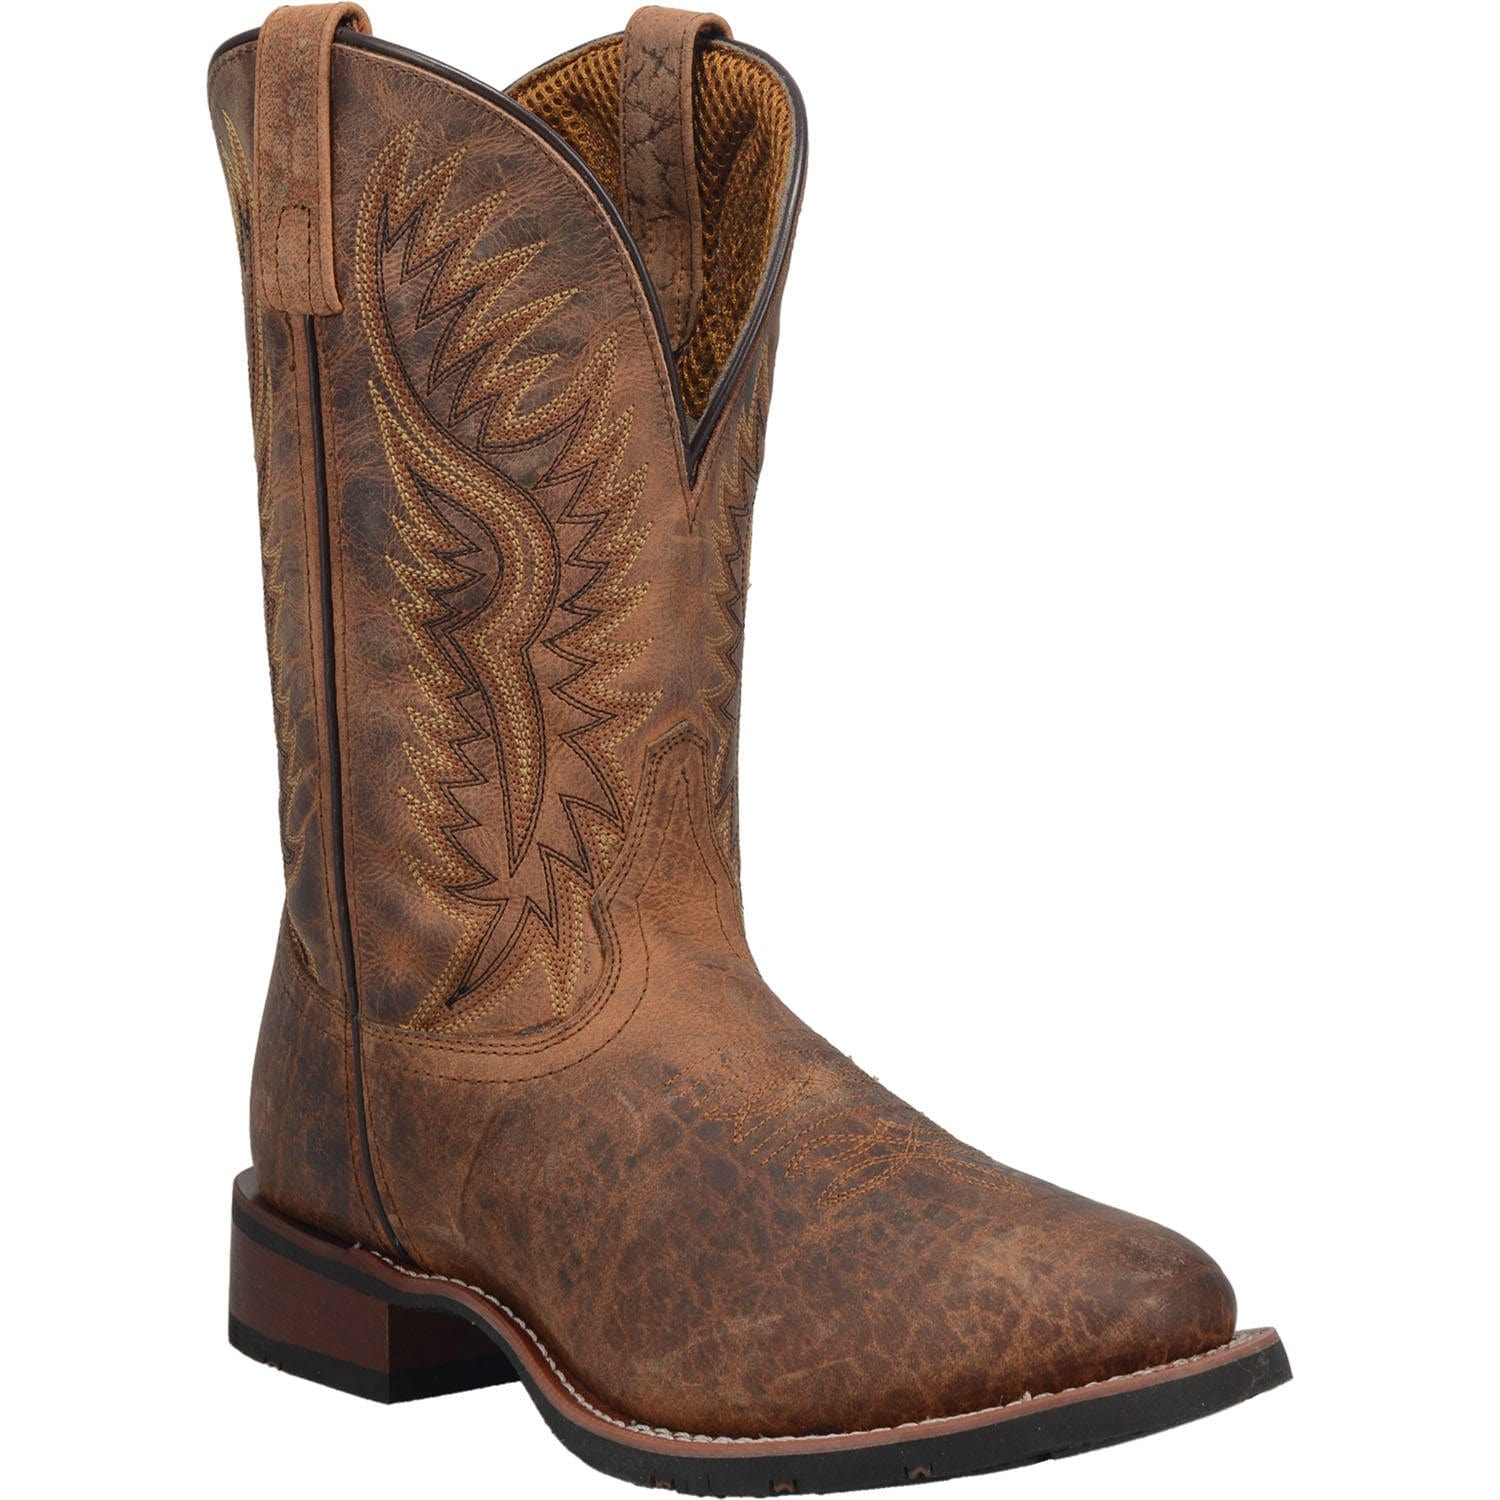 LAREDO Boots Laredo Men's Pinetop Brown Leather Cowboy Boots 7905